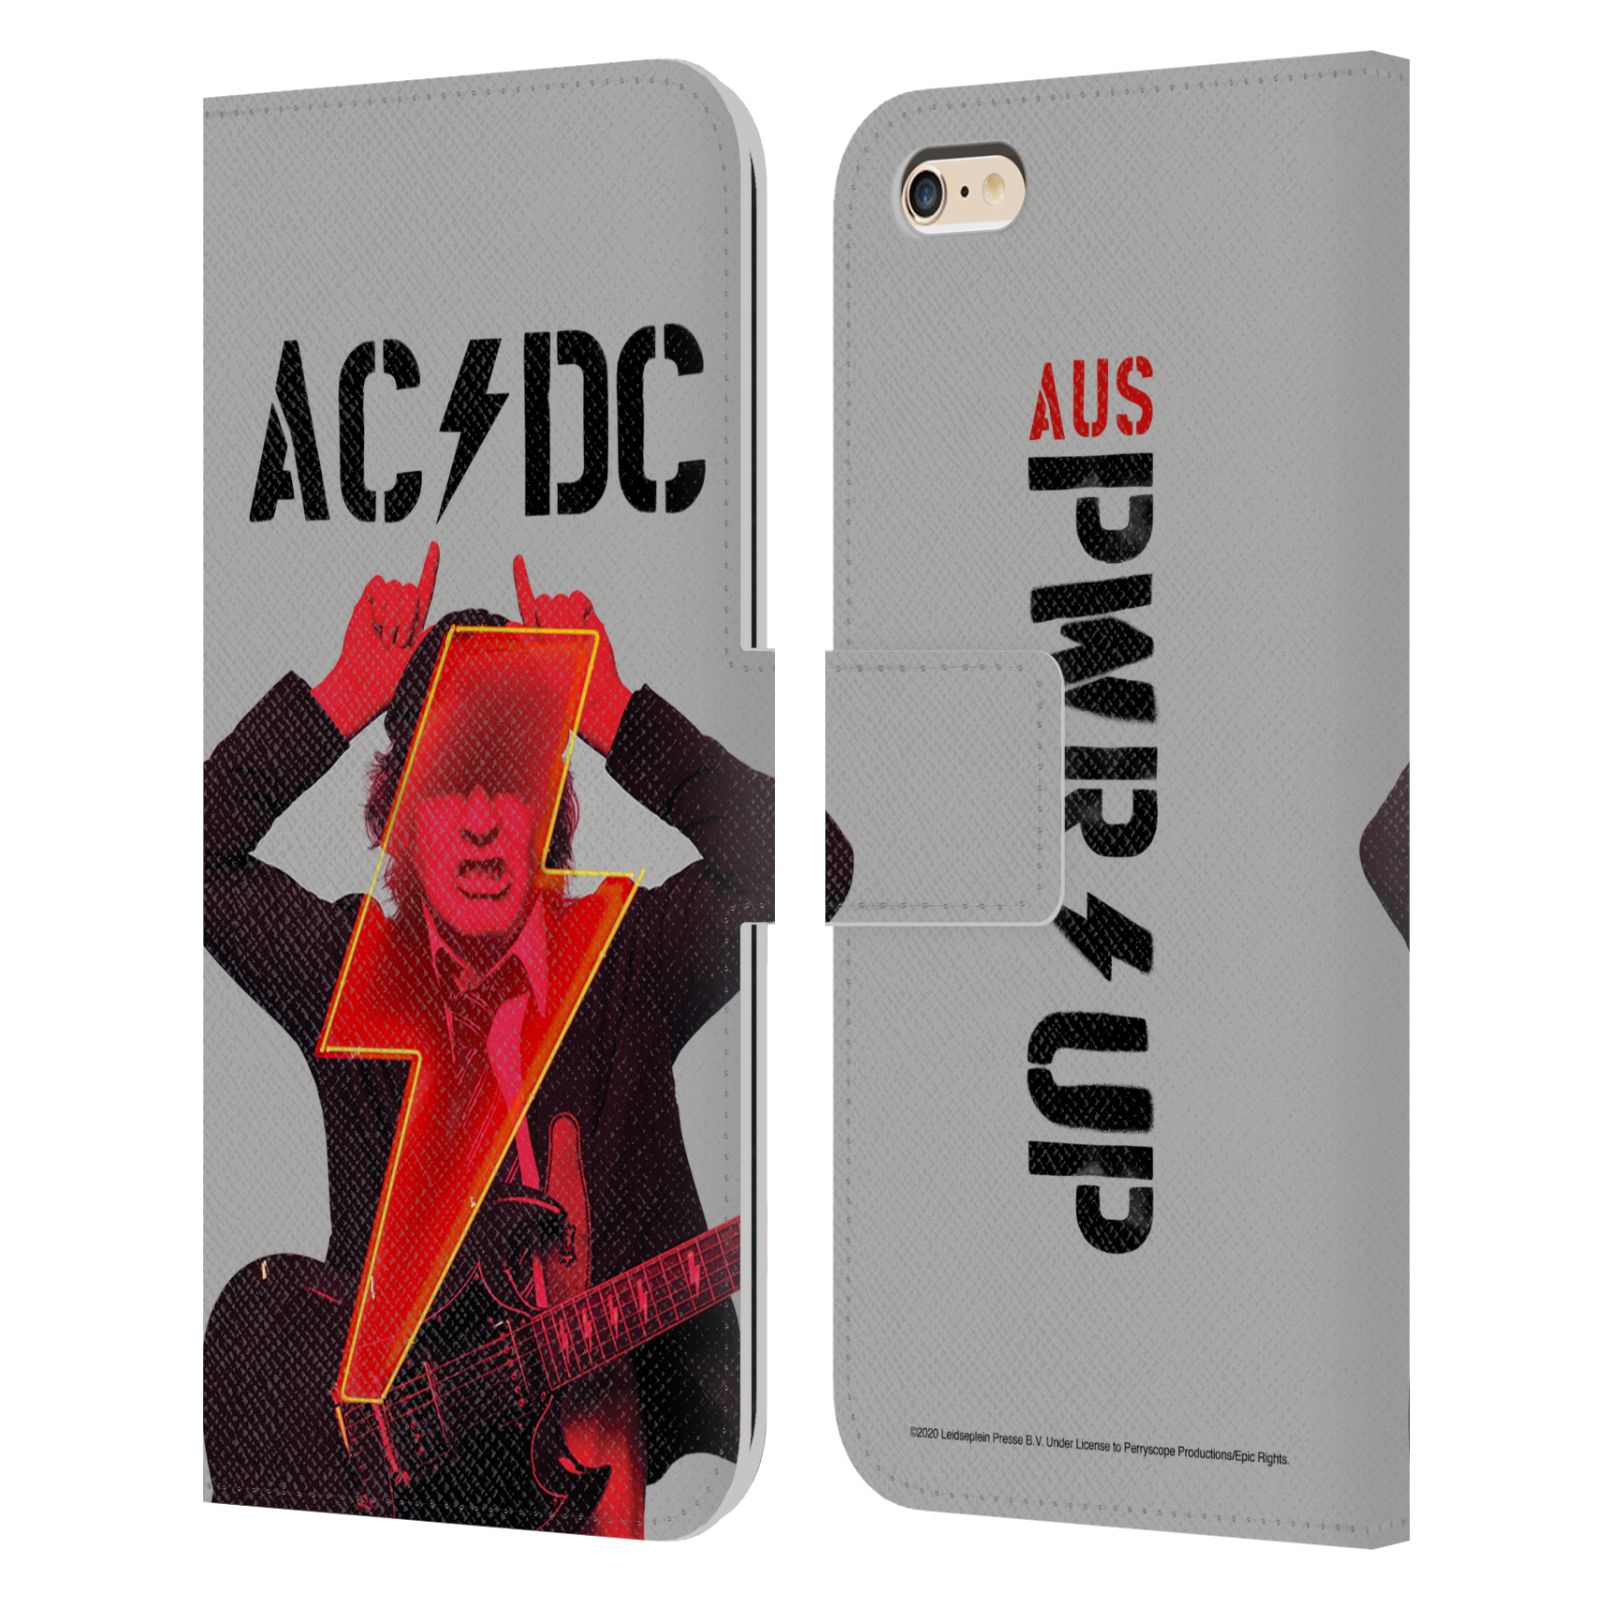 Pouzdro na mobil Apple Iphone 6 PLUS / 6S PLUS - HEAD CASE - Rocková skupin ACDC - Rudý ďábel